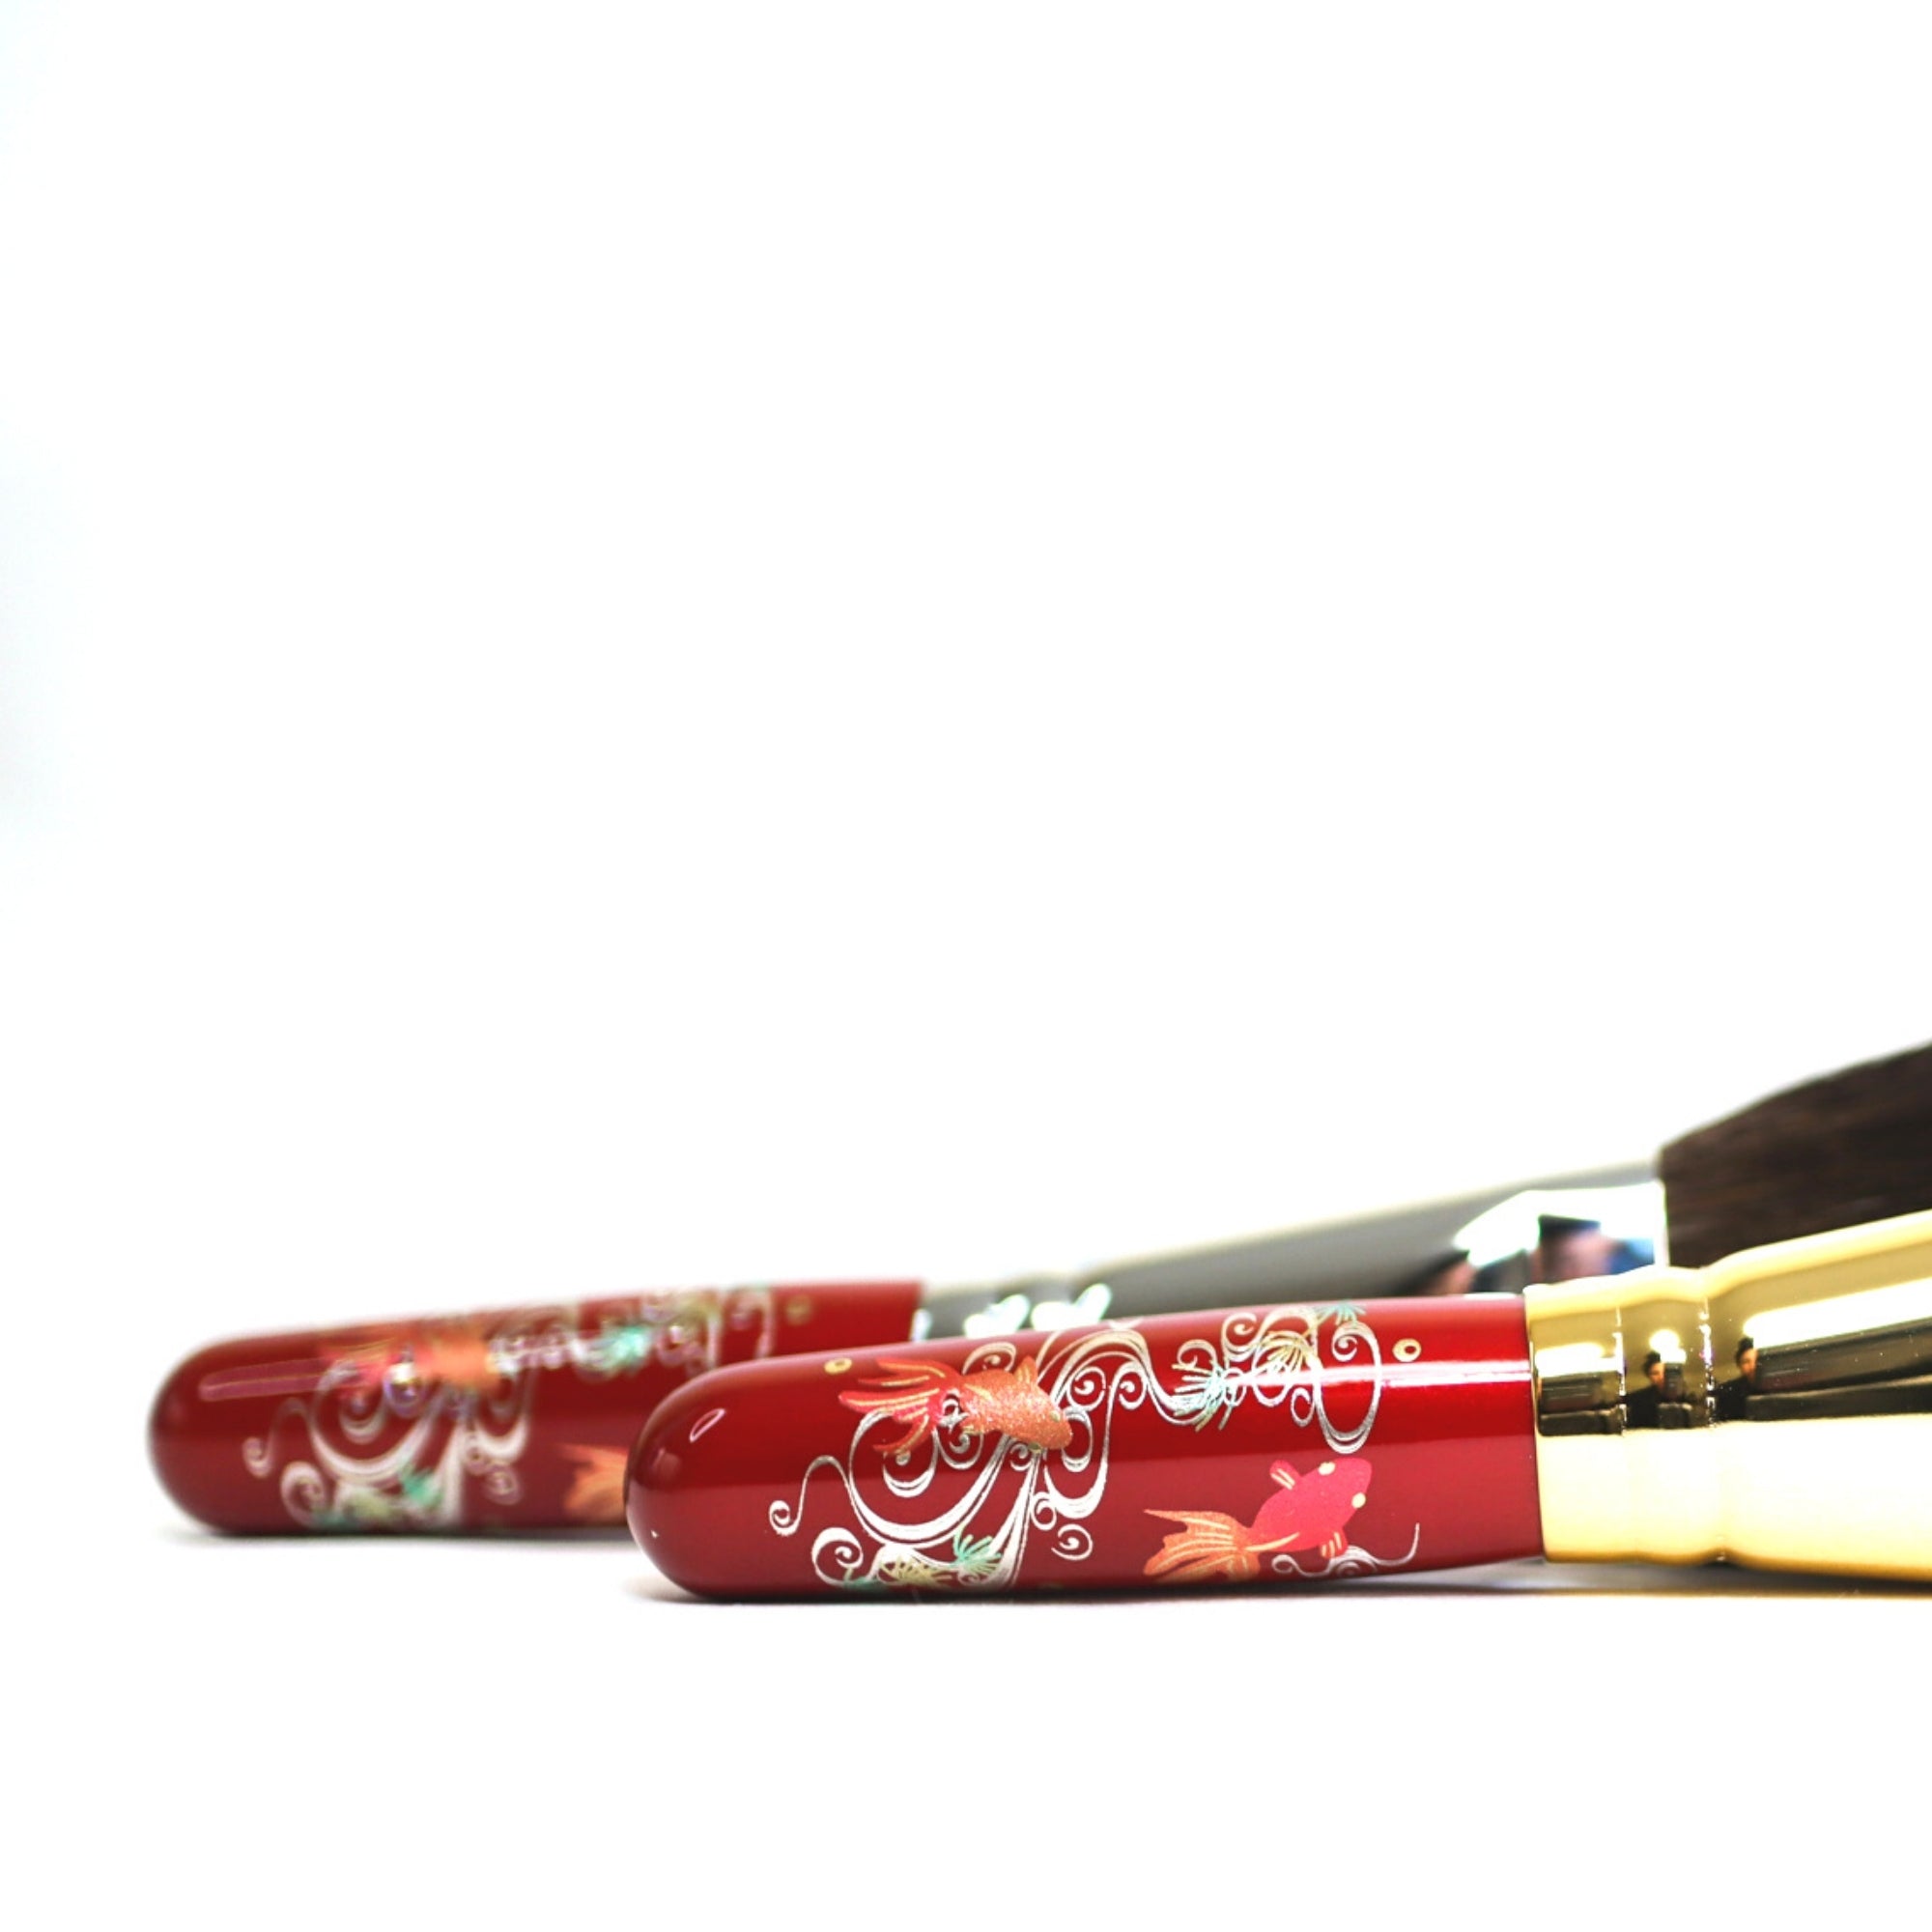 Eihodo Kingyo 金魚 (Goldfish) Powder Brush, Makie Series - Fude Beauty, Japanese Makeup Brushes